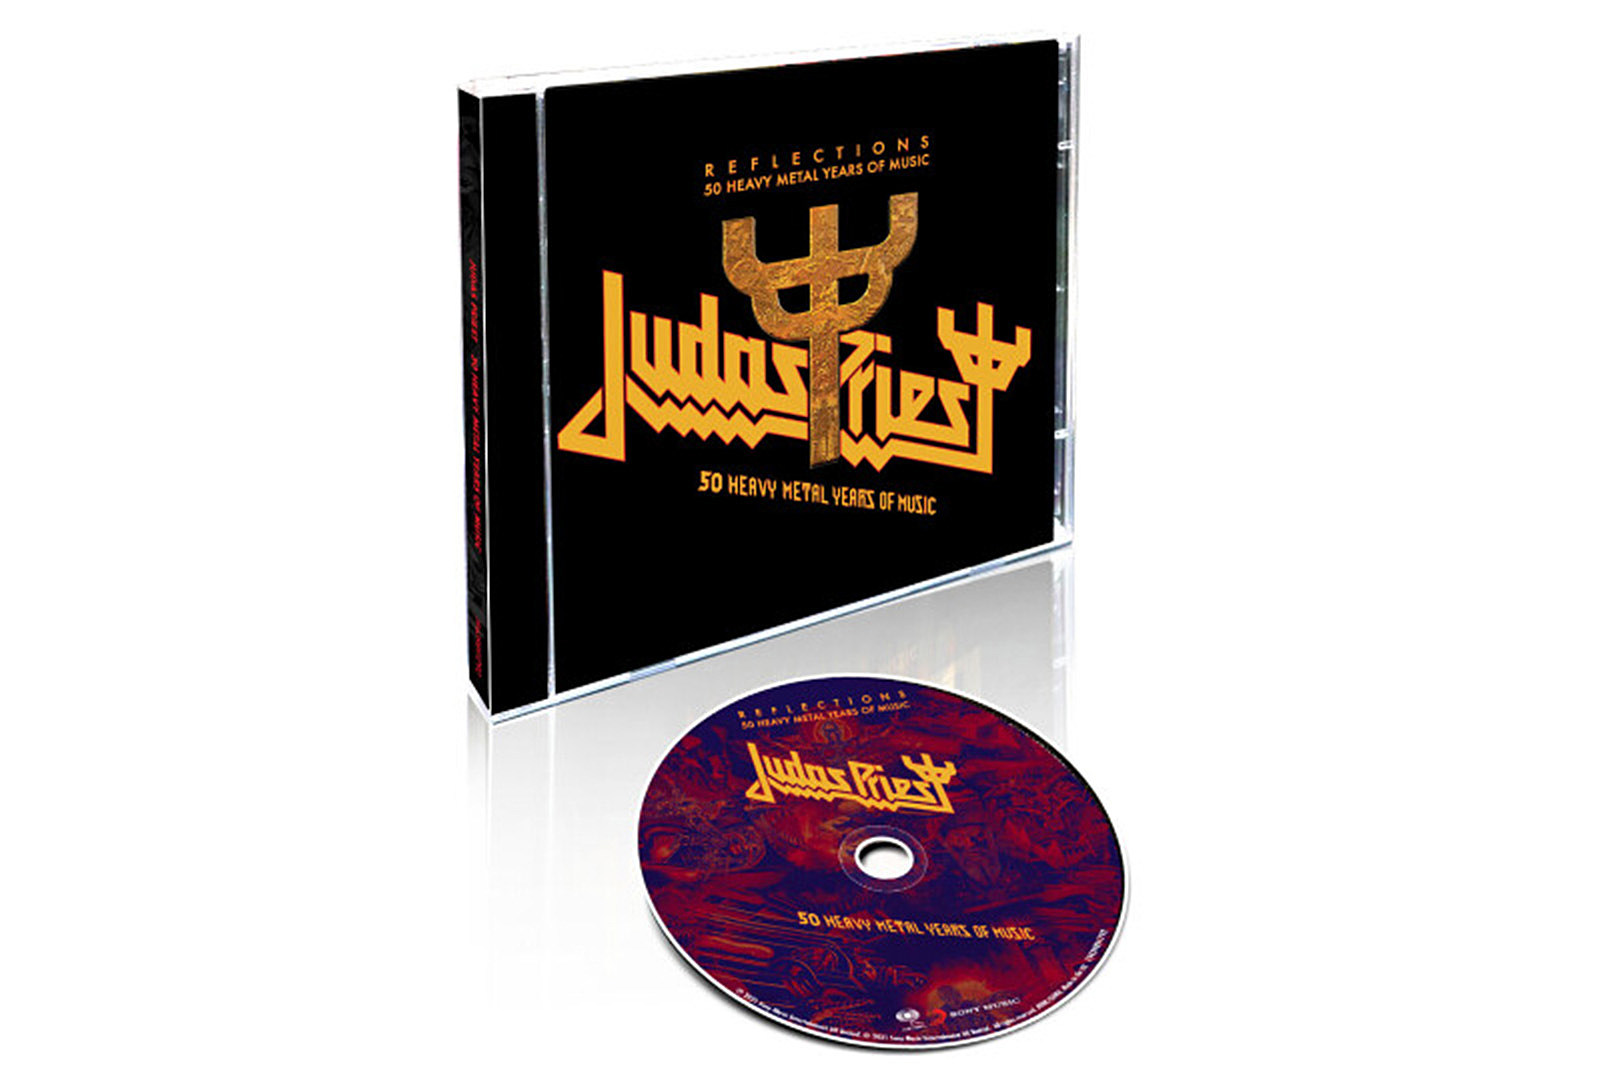 Judas Priest Announce Huge 50th Anniversary 'Reflections' Box Set